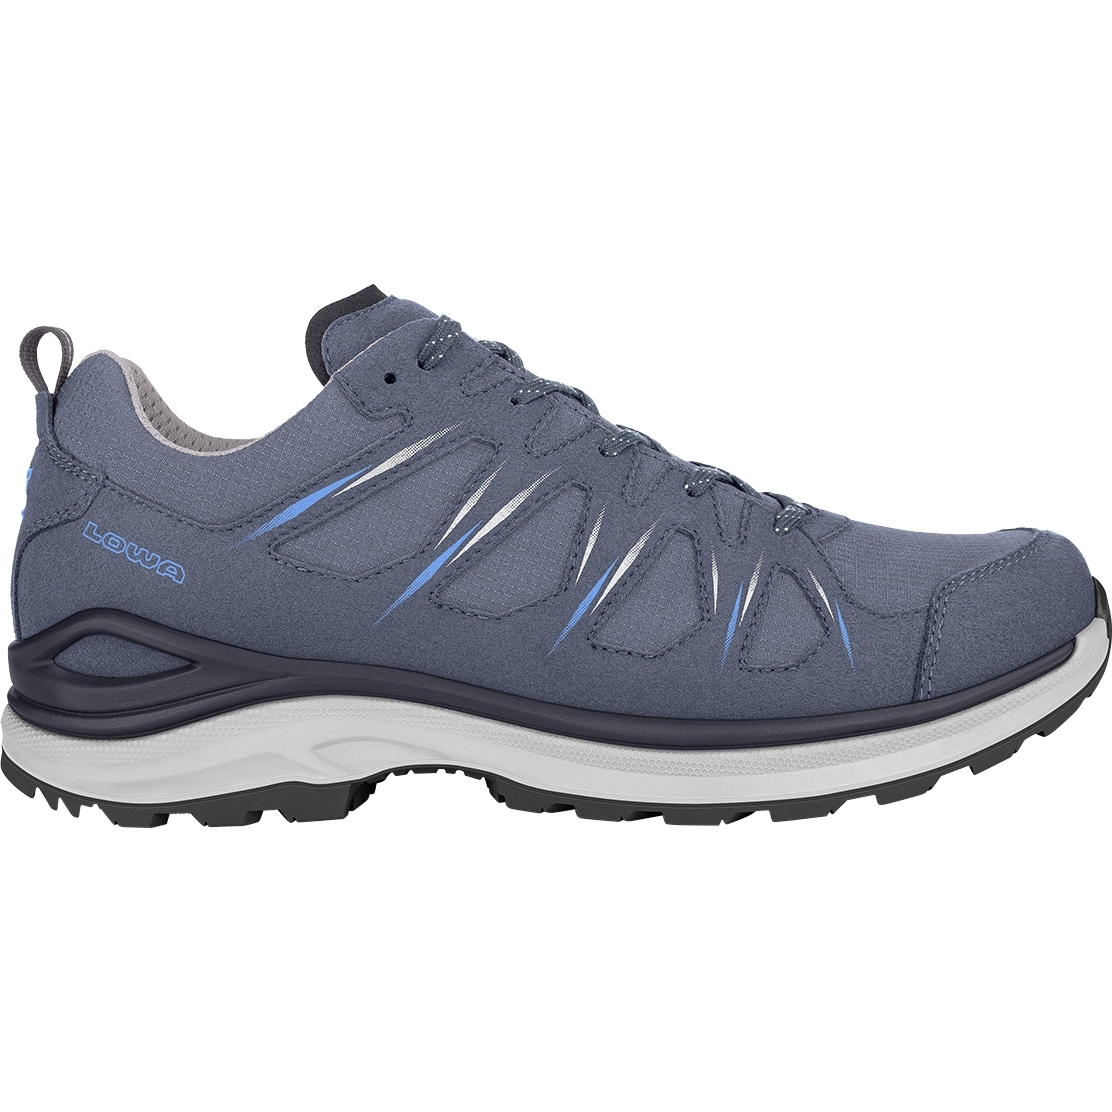 Produktbild von LOWA Innox Evo II GTX Schuhe Herren - stahlblau/ocean